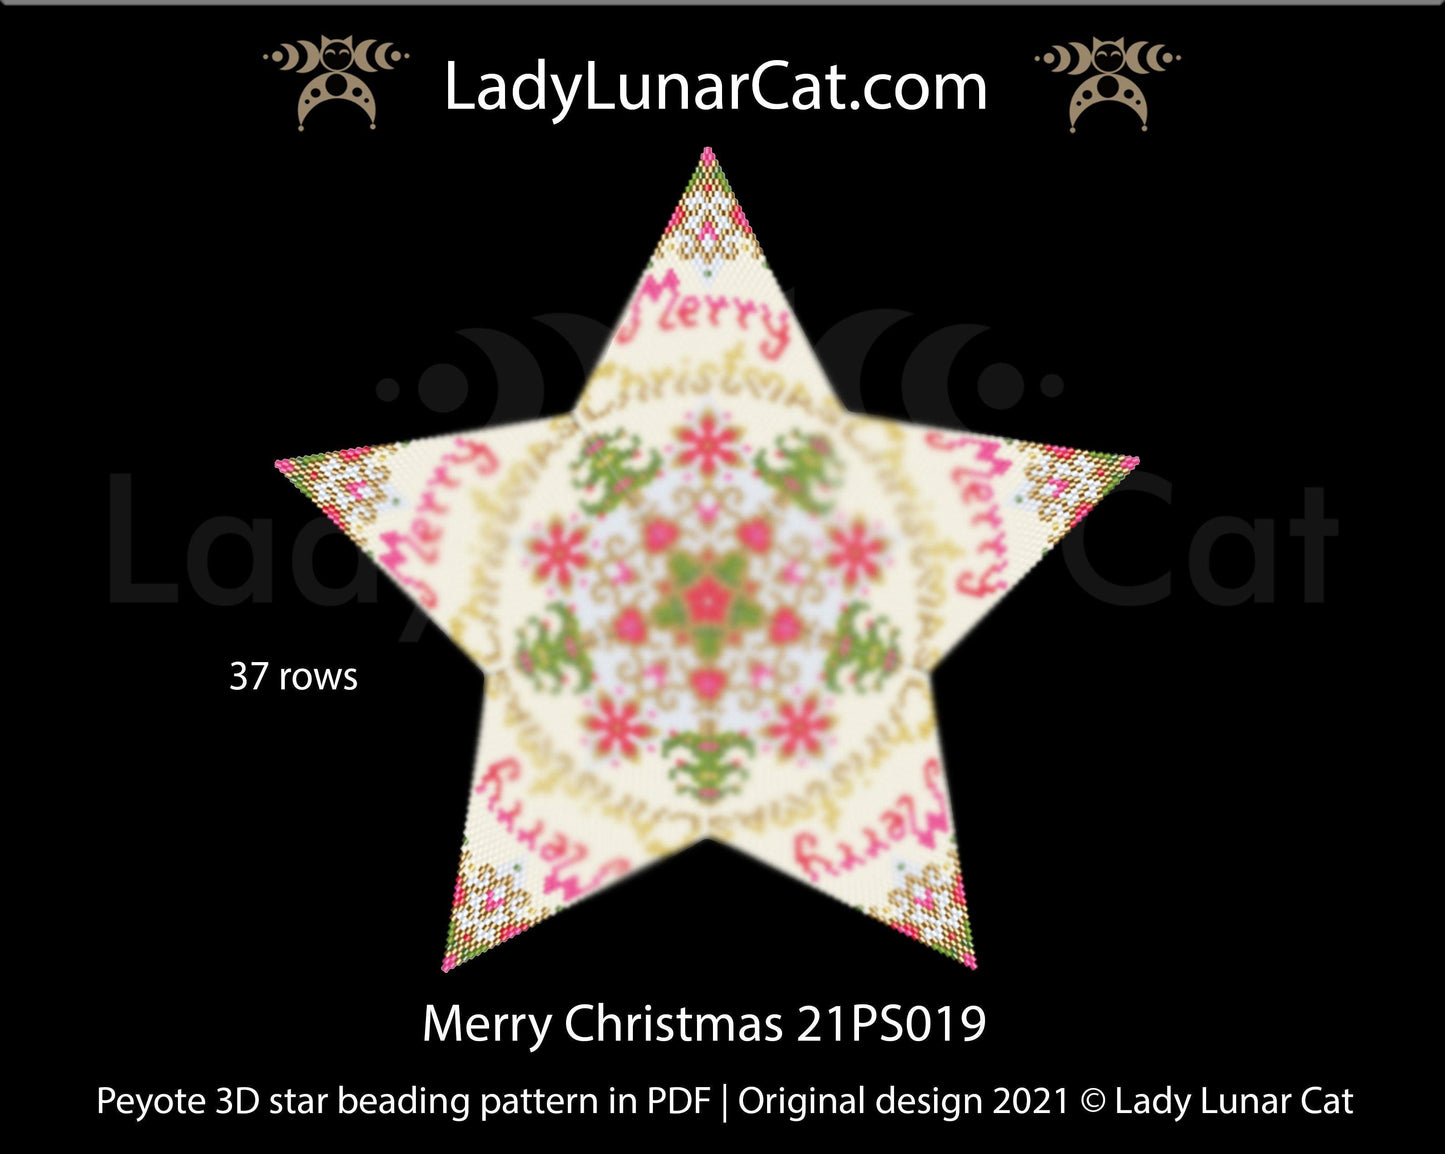 Beaded star pattern - Merry Christmas 21PS019 | Seed beads tutorial for 3D peyote star LadyLunarCat